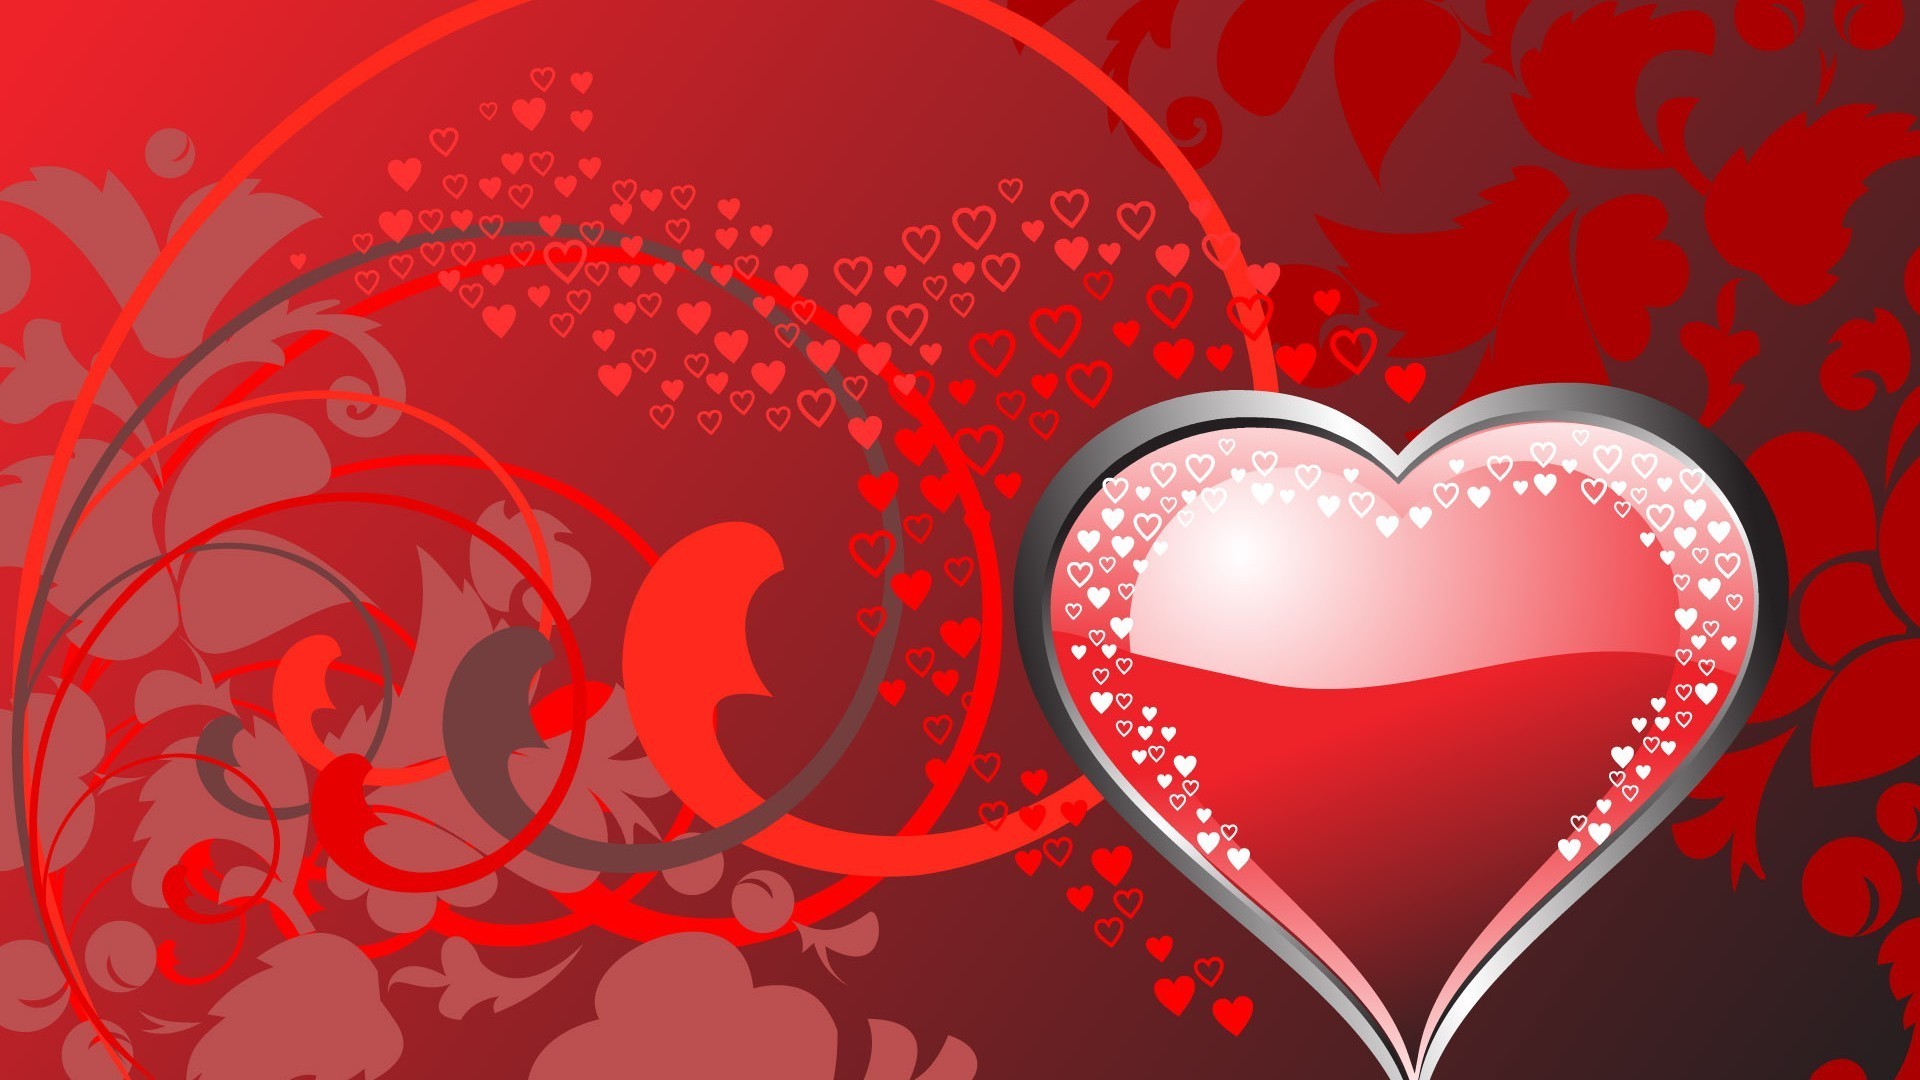 hearts heart romance love romantic design illustration card shape vector abstract desktop decoration celebration greeting wedding symbol pattern marriage art